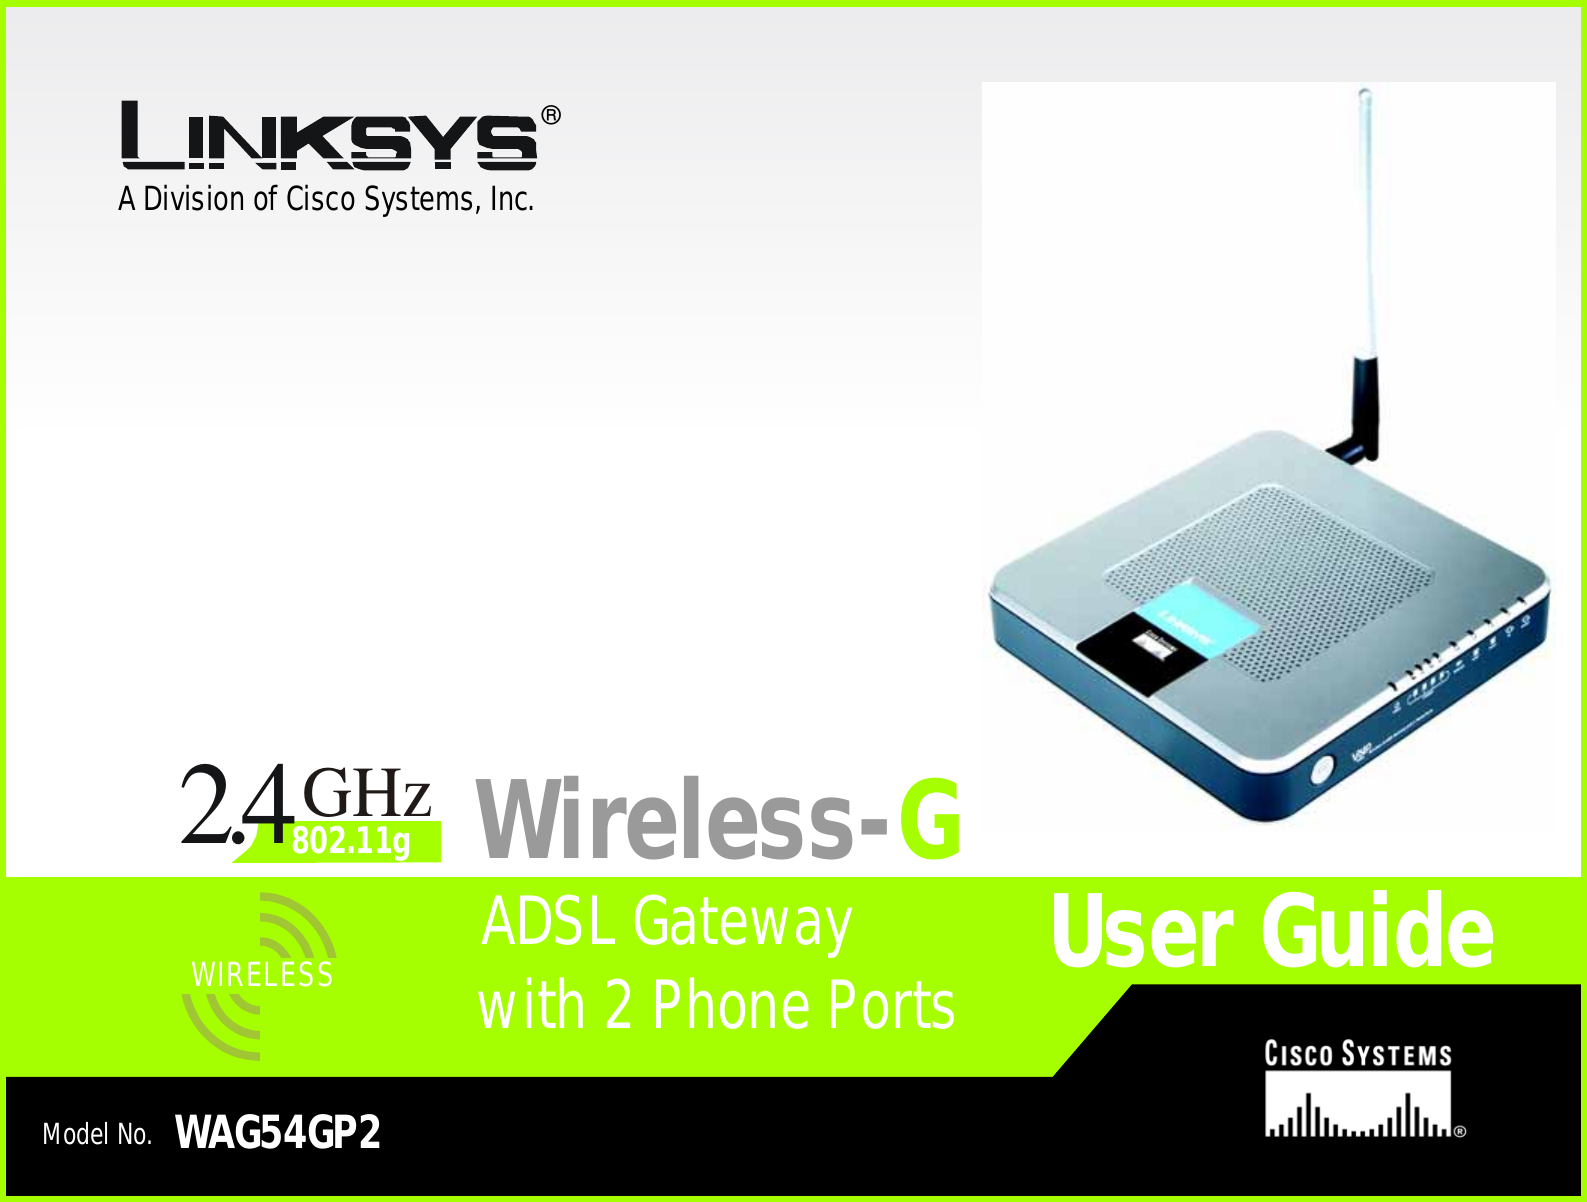 A Division of Cisco Systems, Inc.®Model No.ADSL GatewayWireless-GWAG54GP2User GuideWIRELESSGHz2.4802.11gwith 2 Phone Ports